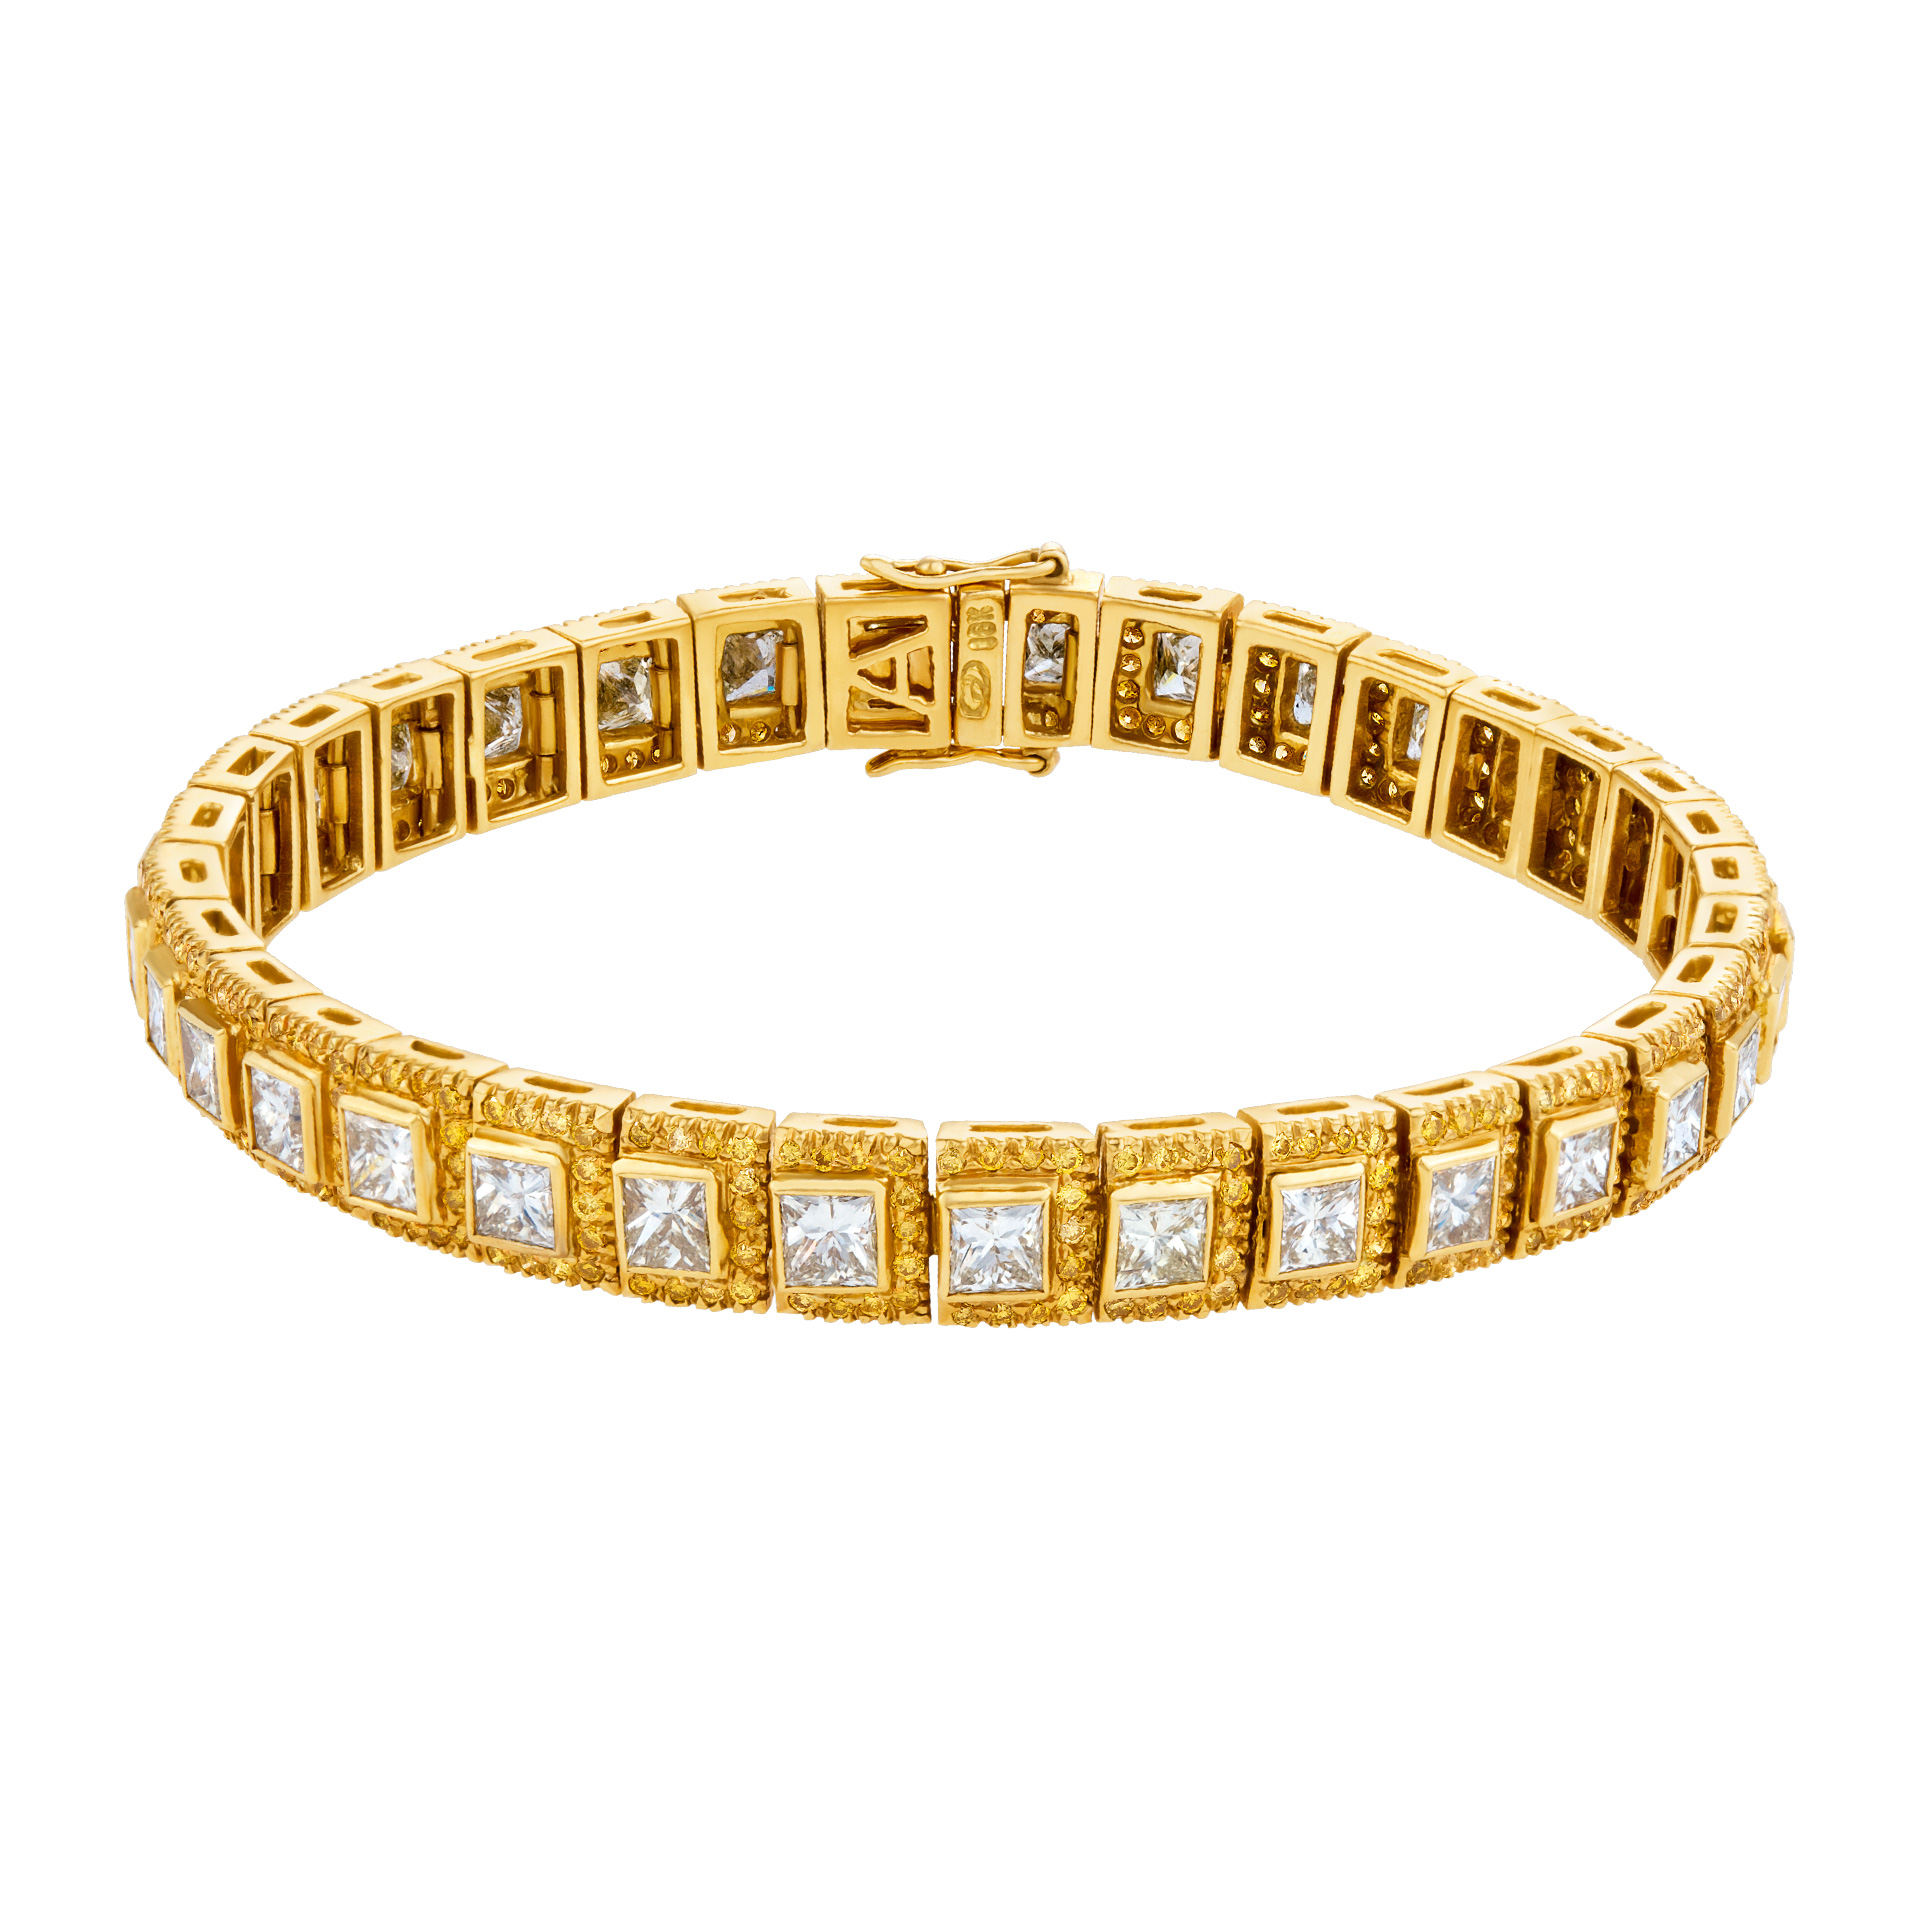 White and yellow diamond  bracelet set in 18k gold